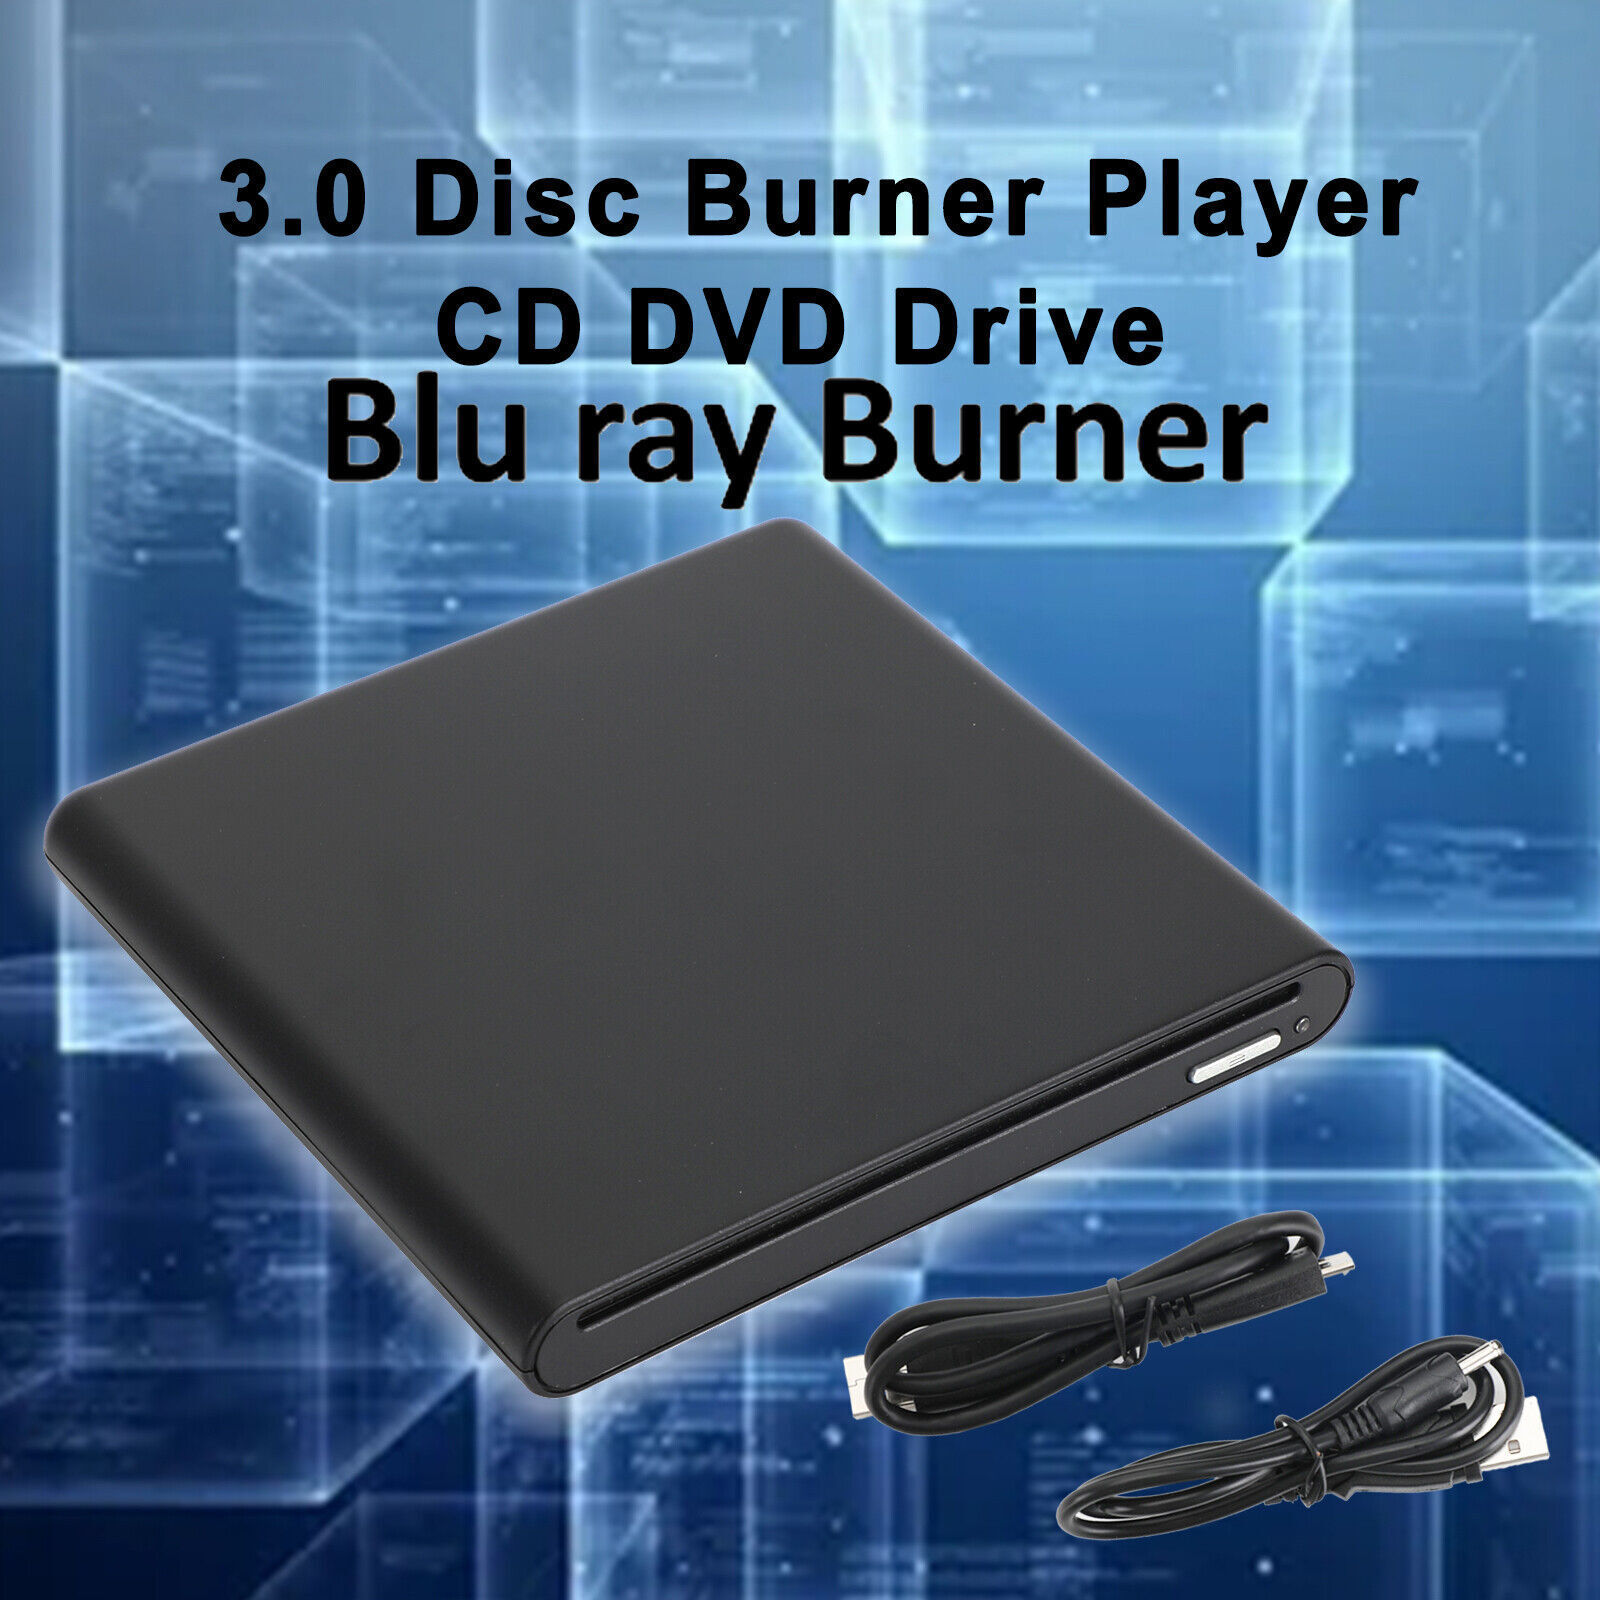 Blu ray BD Burner External USB 3.0 Slot In DVD RW CD Writer Portable Drive UE